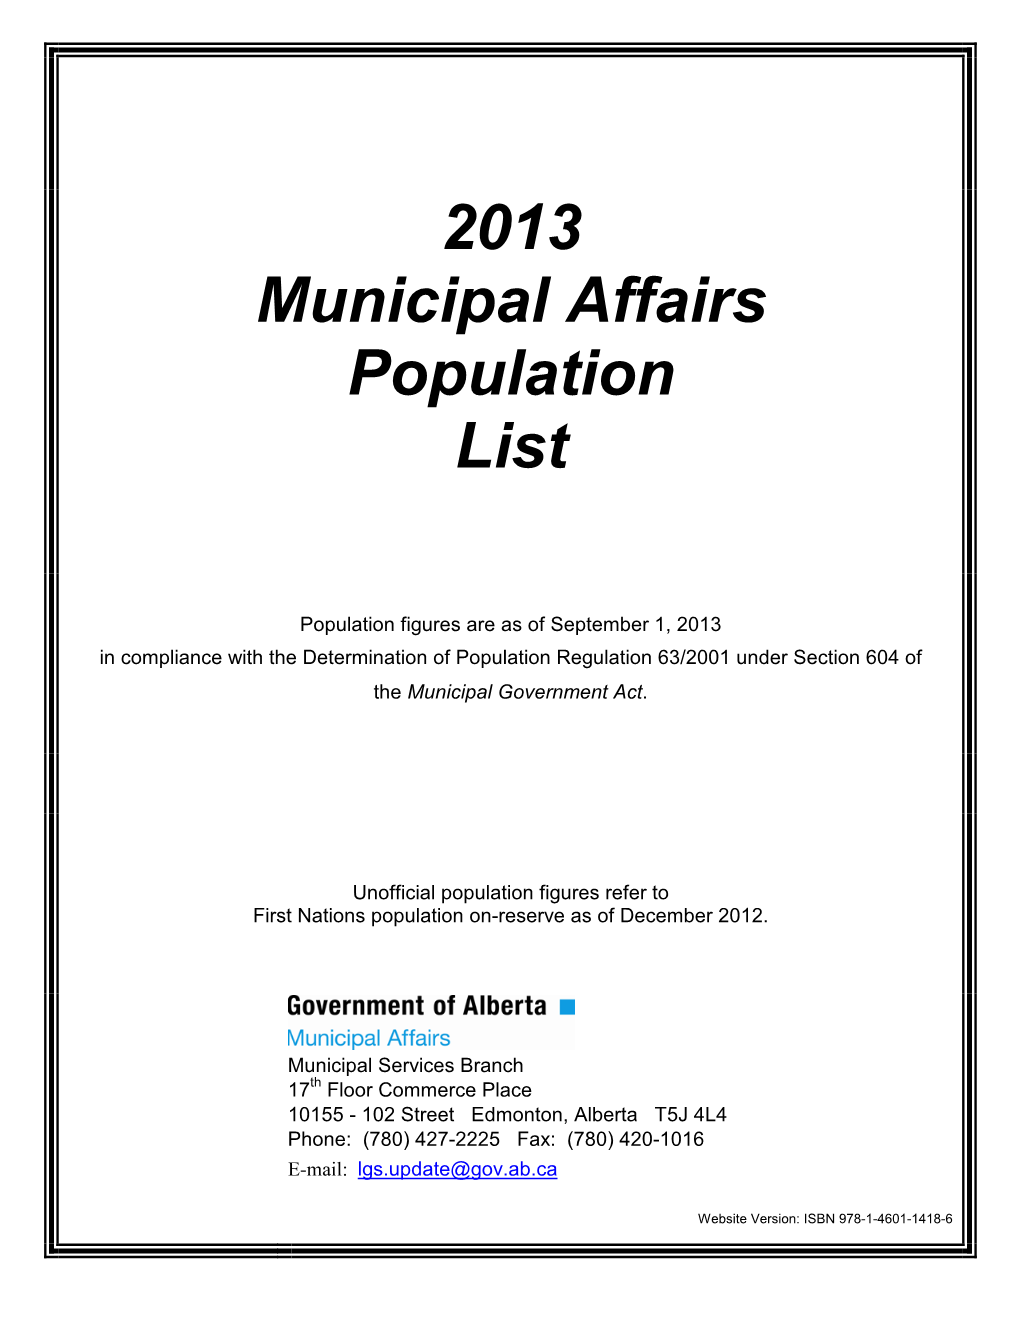 2013 Municipal Affairs Population List